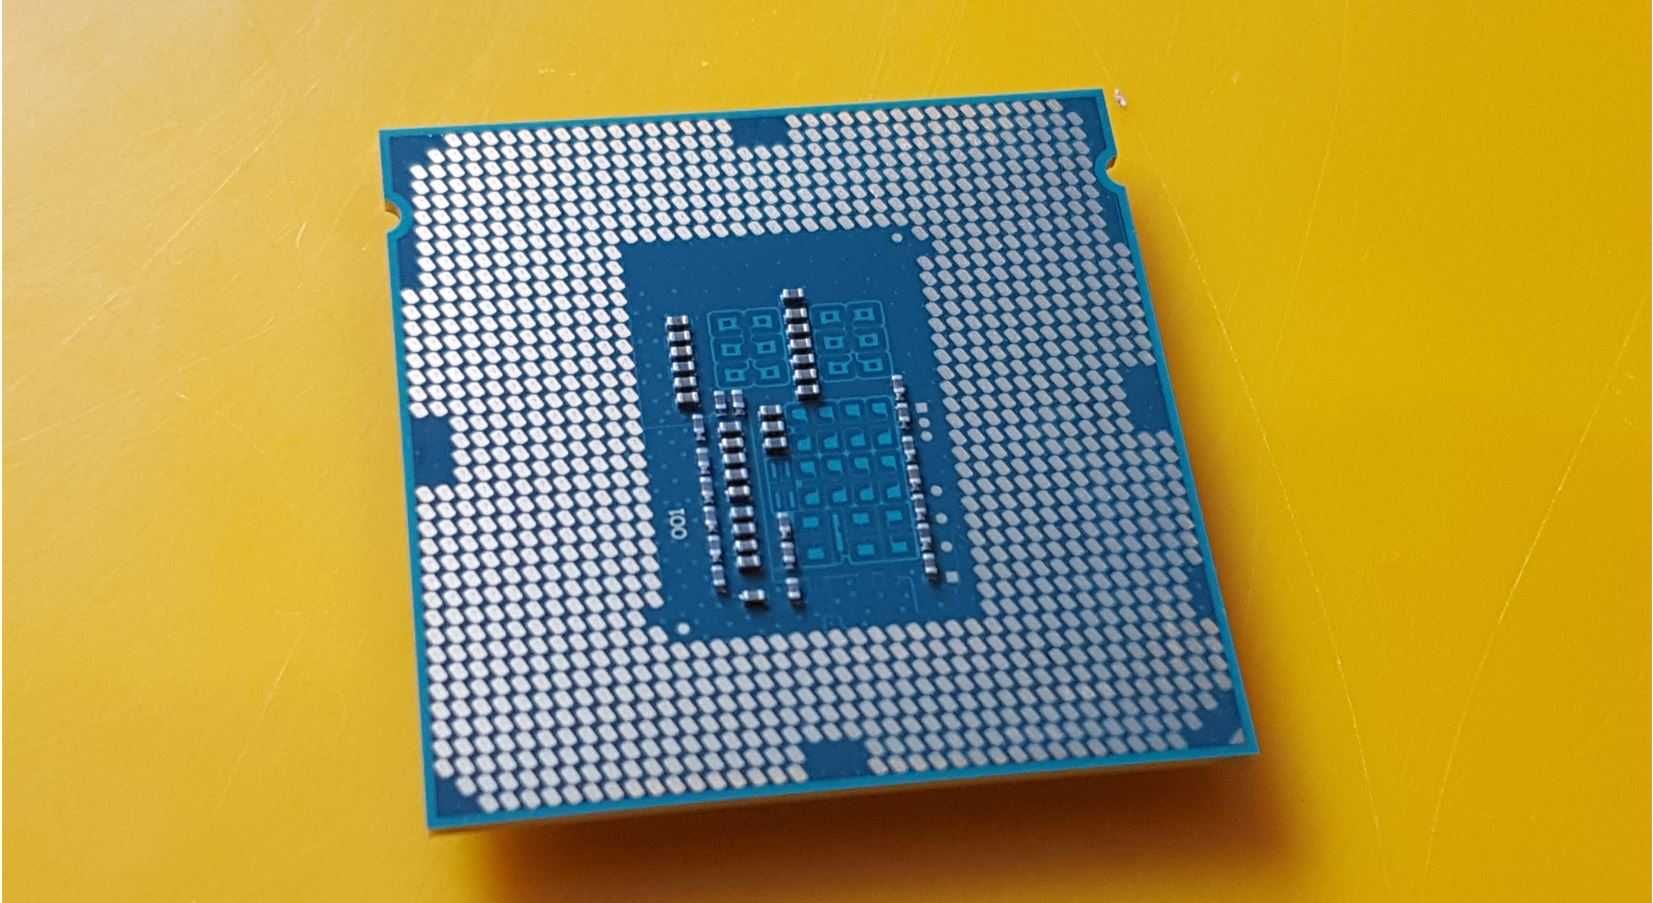 Procesor Intel Core i3-4160,3,60Ghz,3MB,Socket 1150,Gen 4,Haswell